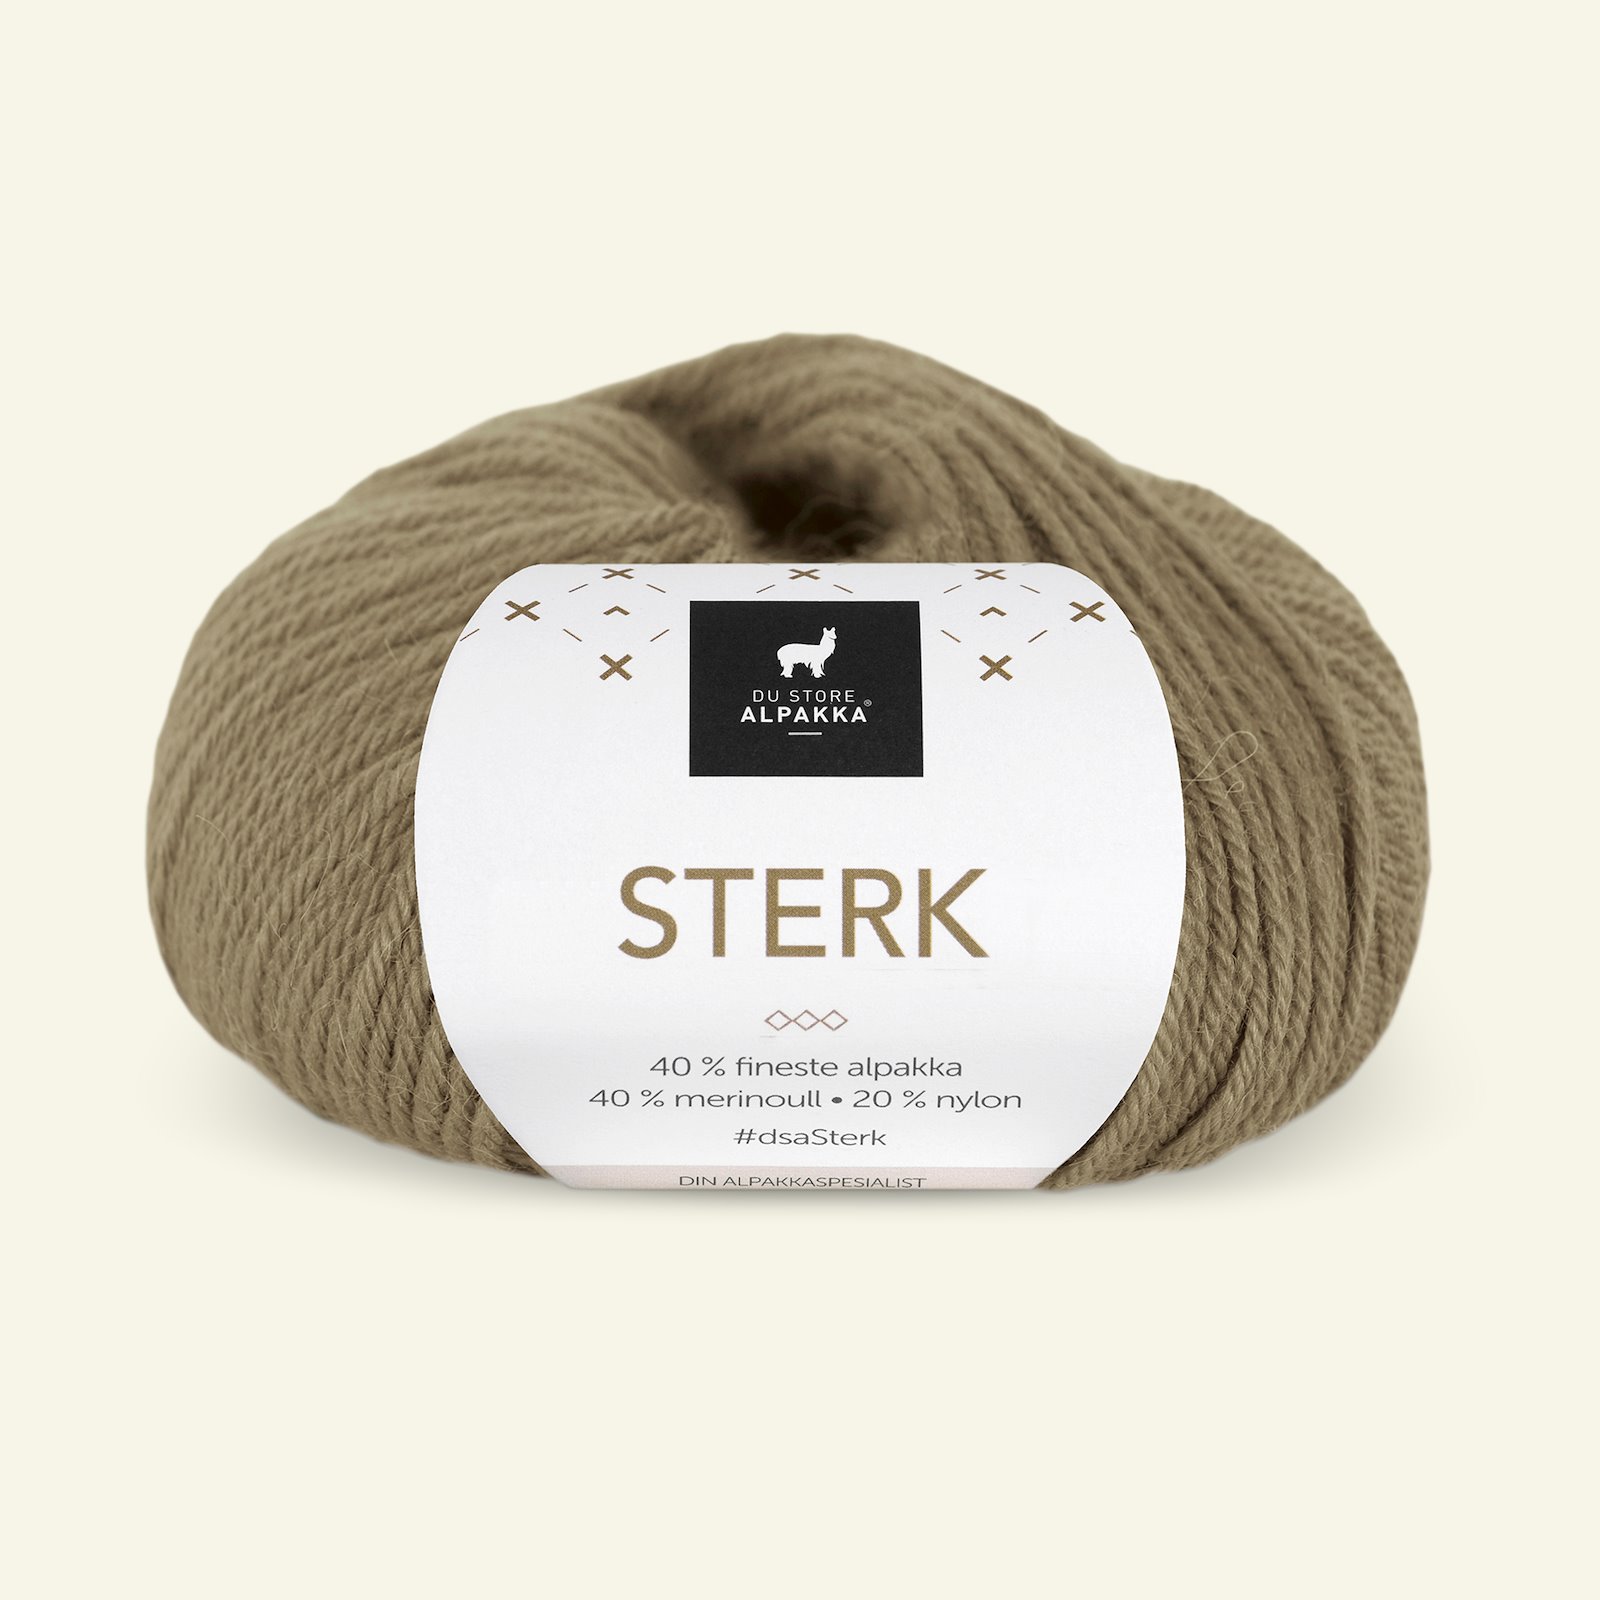 Du Store Alpakka, alpaca merino mixed yarn "Sterk", light olive (917) 90000709_pack